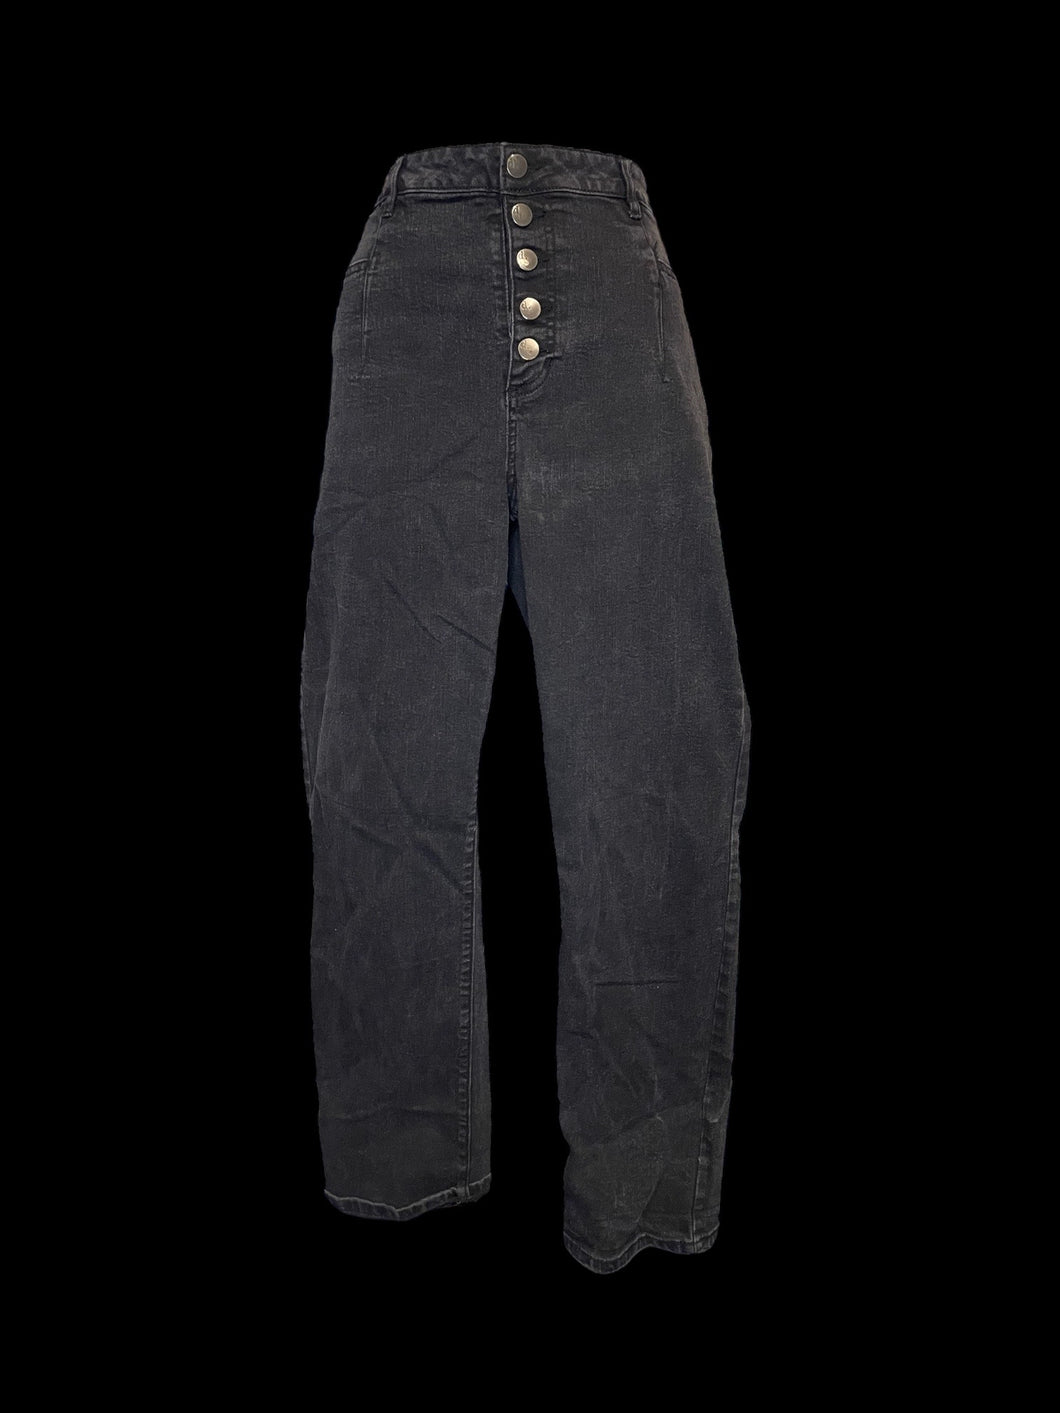 XL Black denim high waist taper leg pants w/ pockets, belt loops, & five button closure